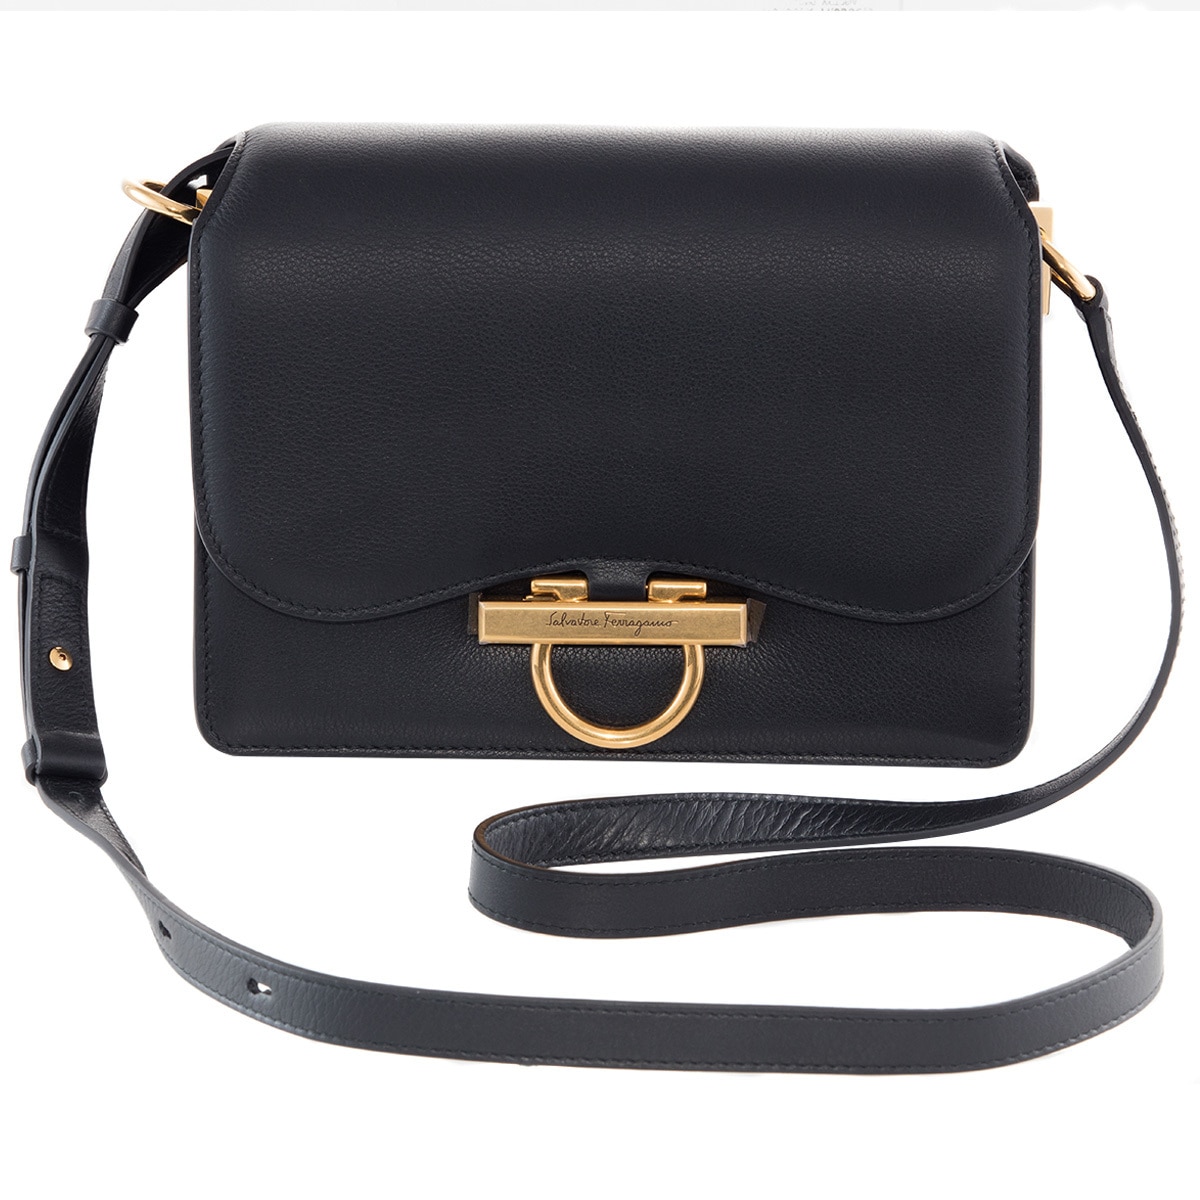 Salvatore Ferragamo Joanne Classic Flap Handbag | Costco ...